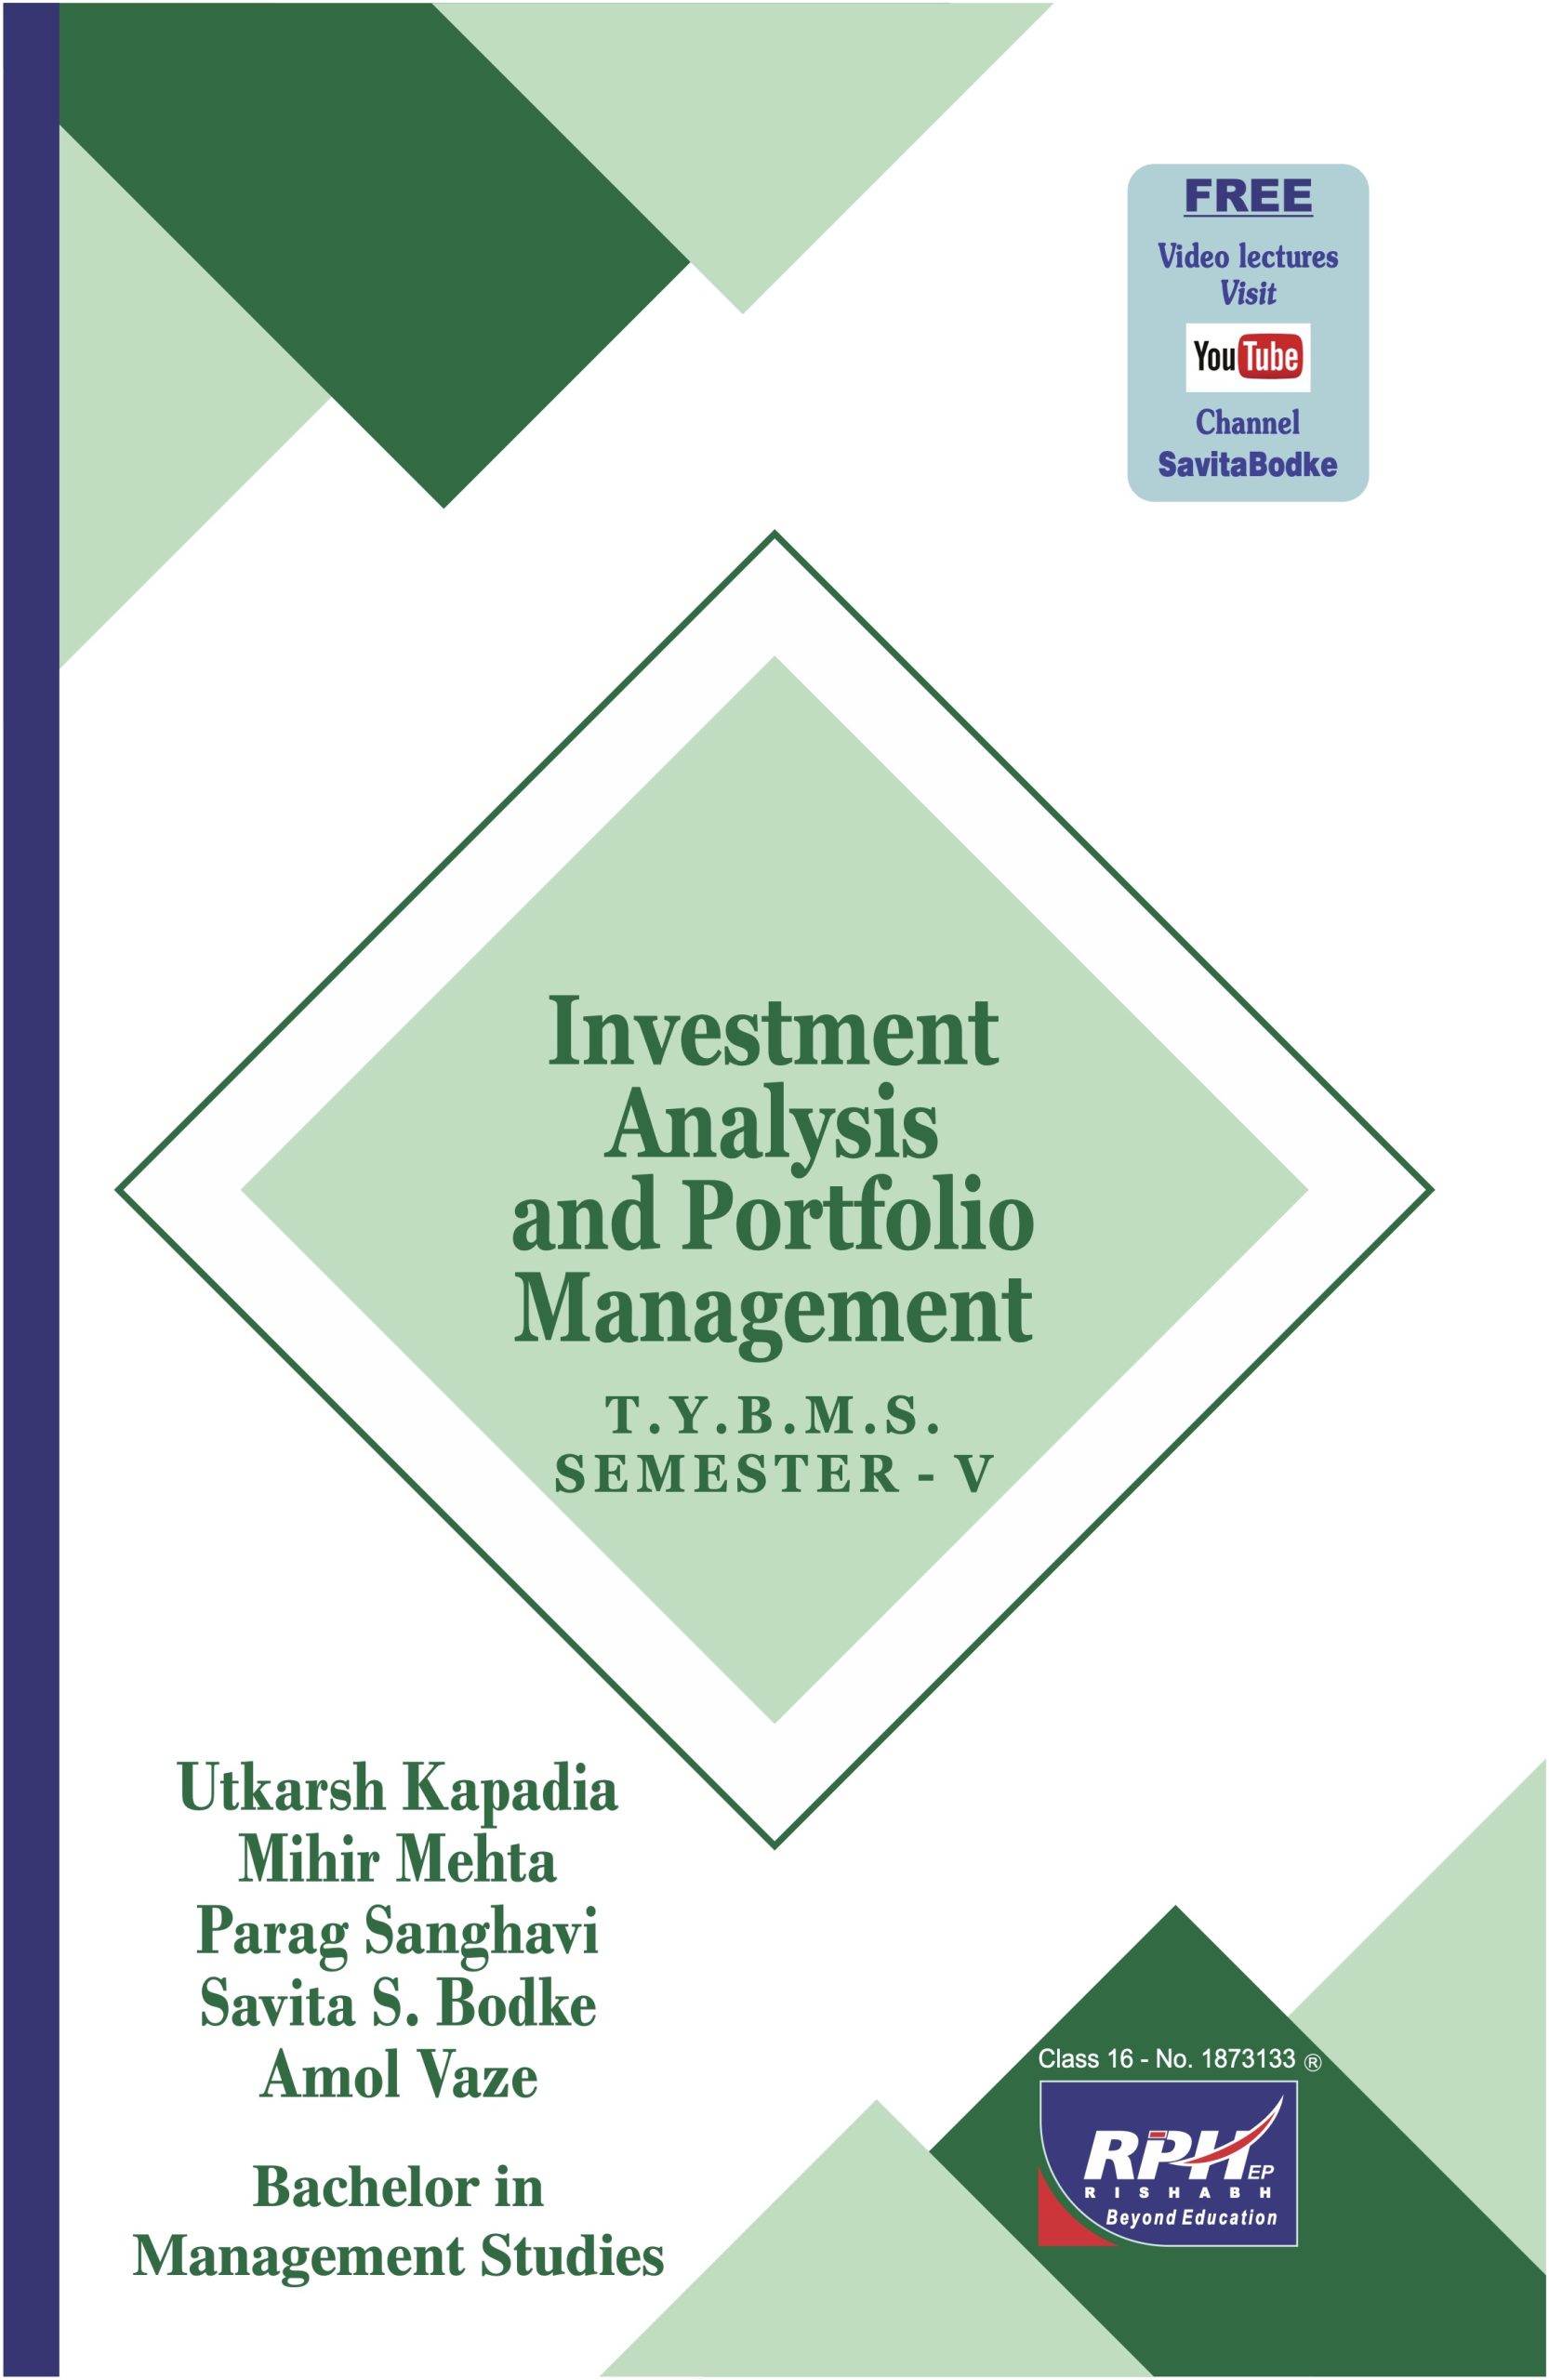 Investment Analysis and Portfolio Management 4